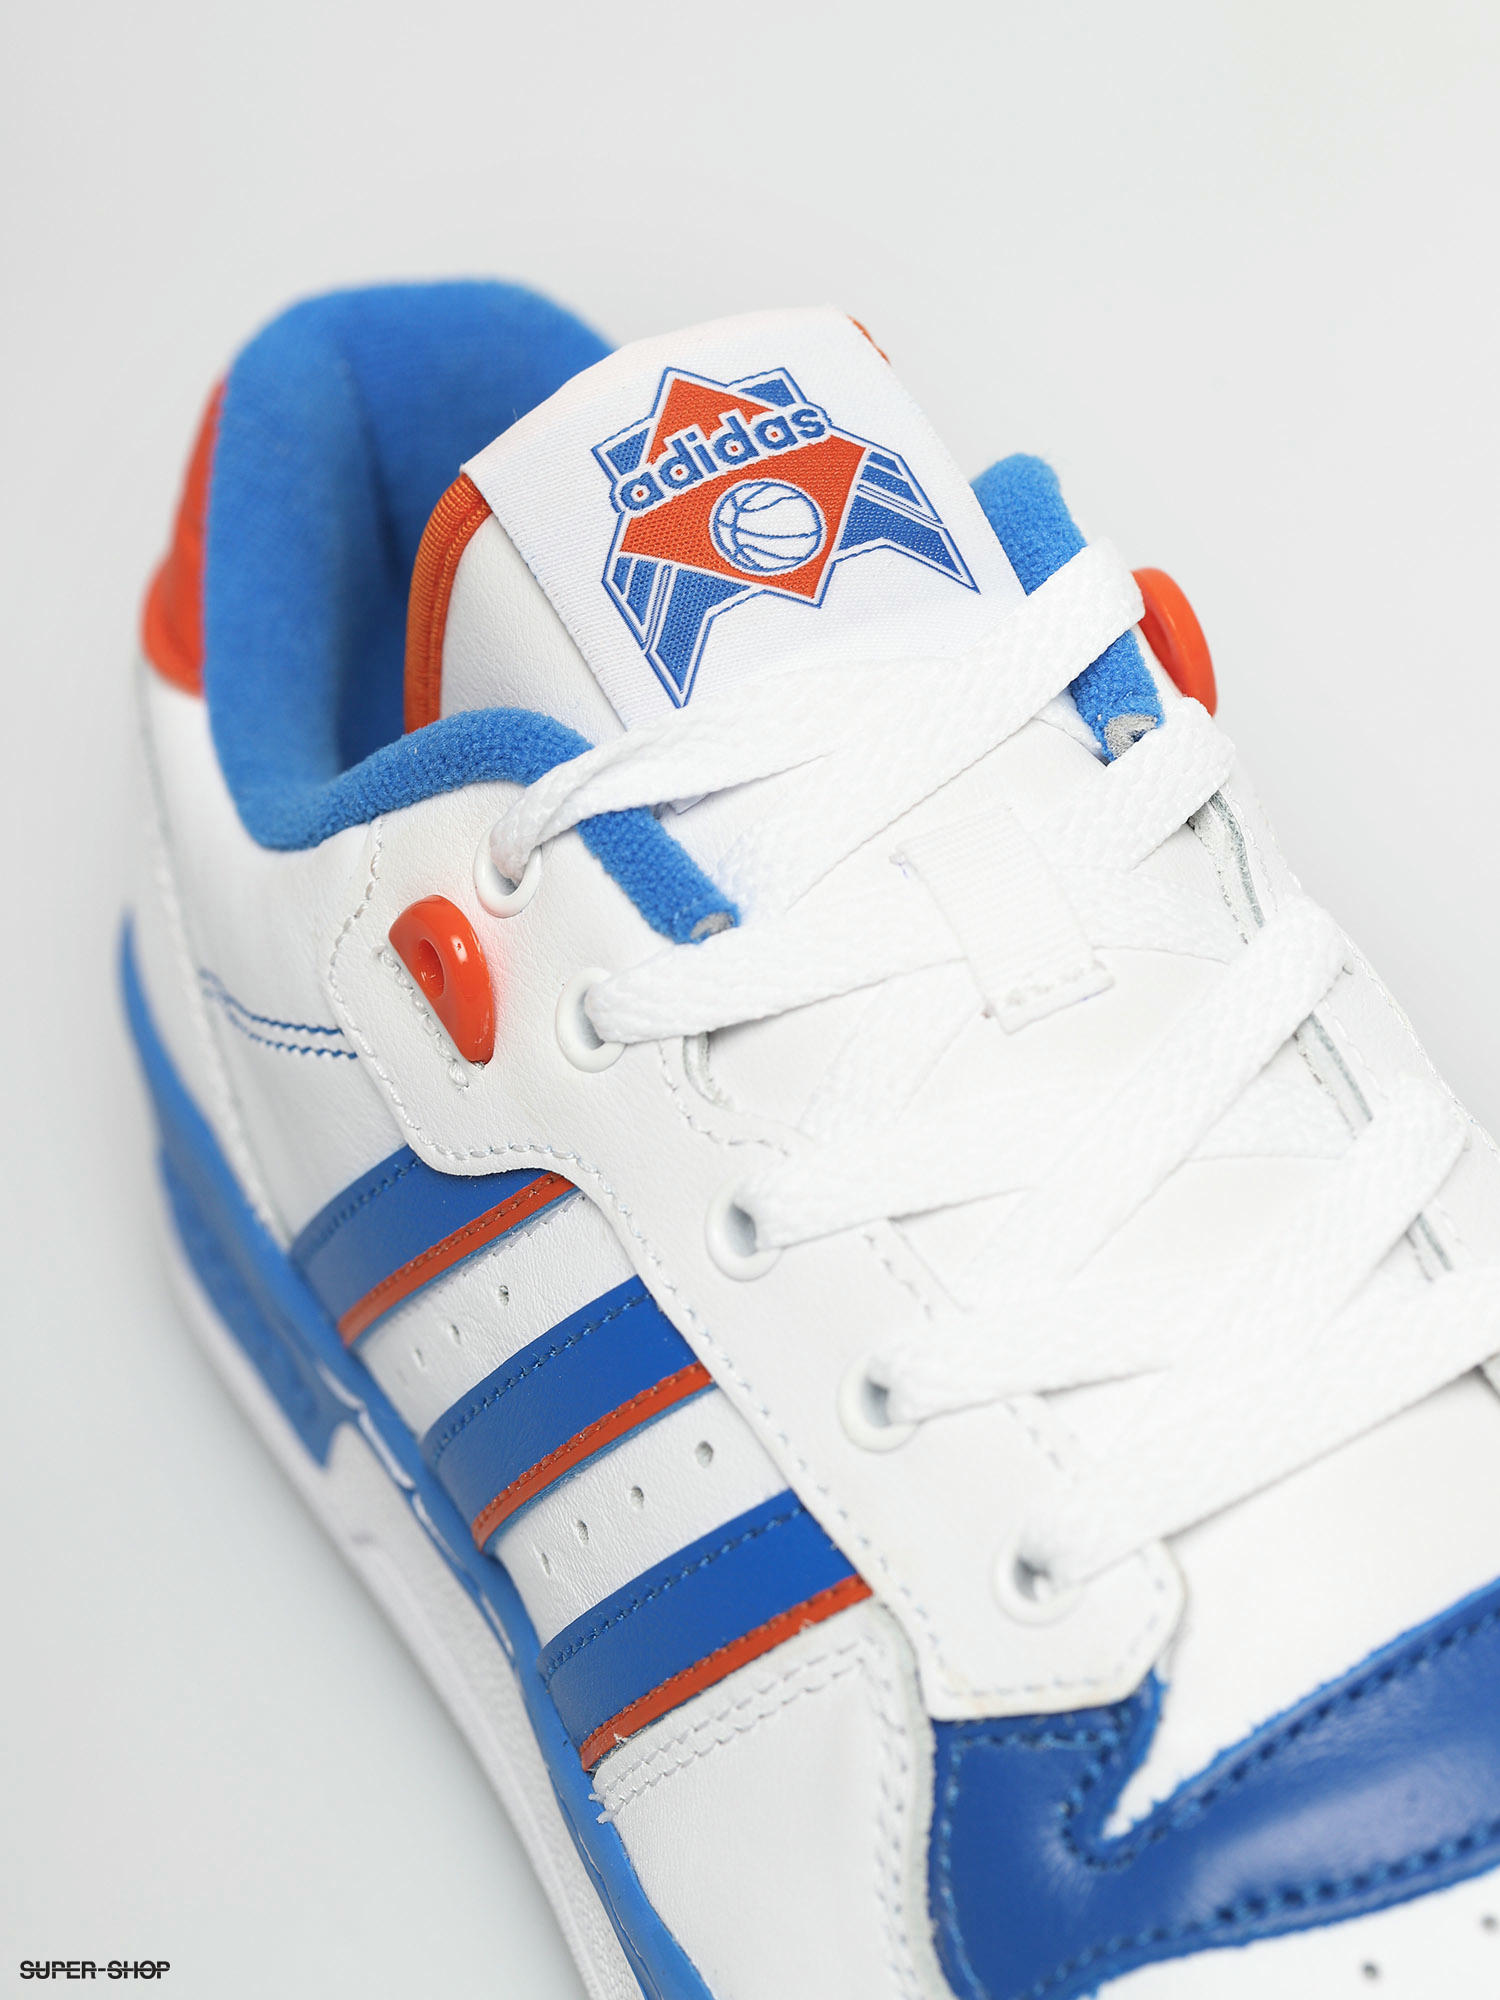 Adidas Rivalry Low Footwear White/Blue-Orange - FU6833